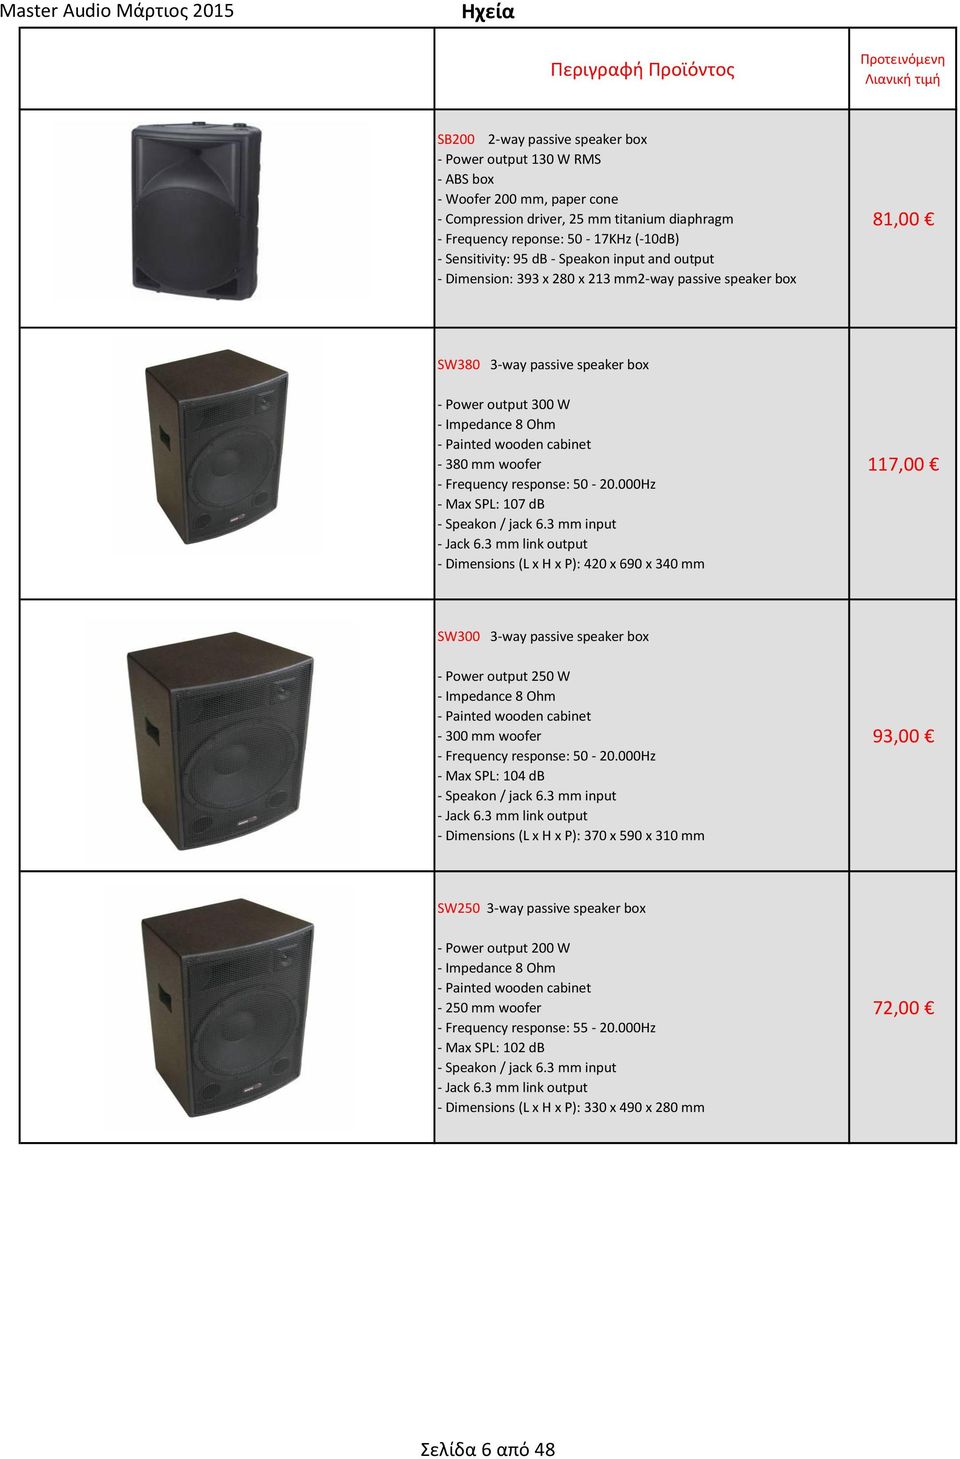 cabinet - 380 mm woofer - Frequency response: 50-20.000Hz - Max SPL: 107 db - Speakon / jack 6.3 mm input - Jack 6.